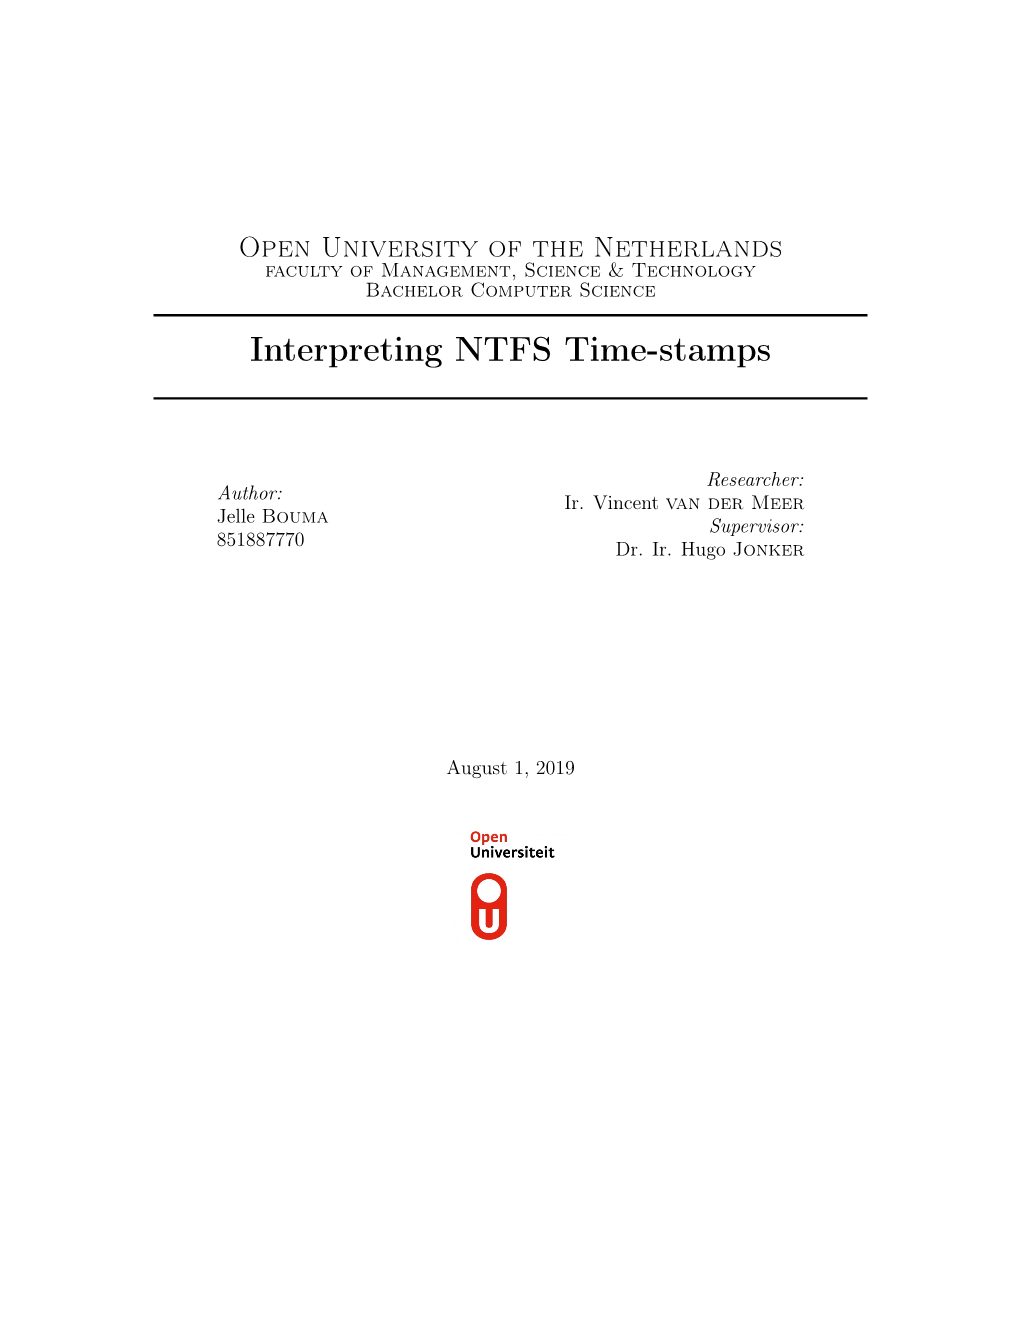 Interpreting NTFS Time-Stamps